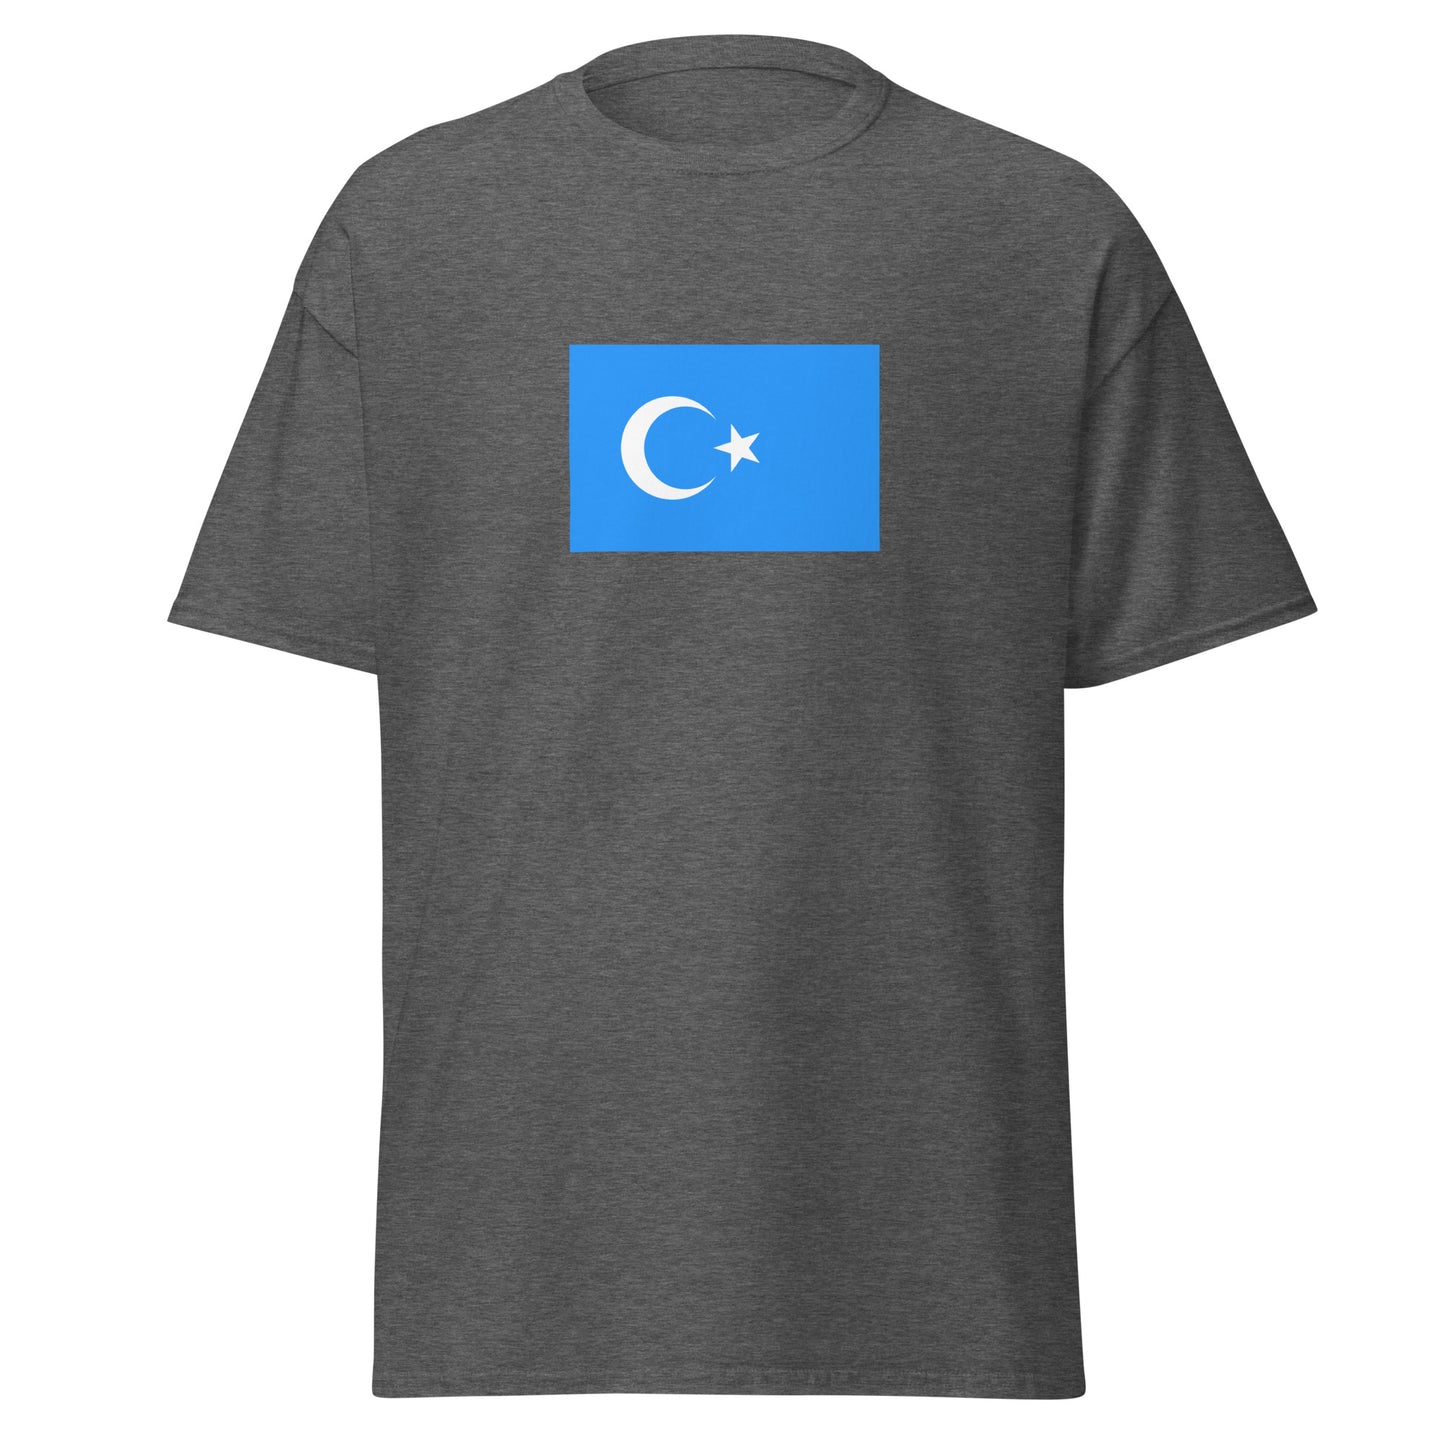 Uyghurs | Ethnic China Flag Interactive T-shirt